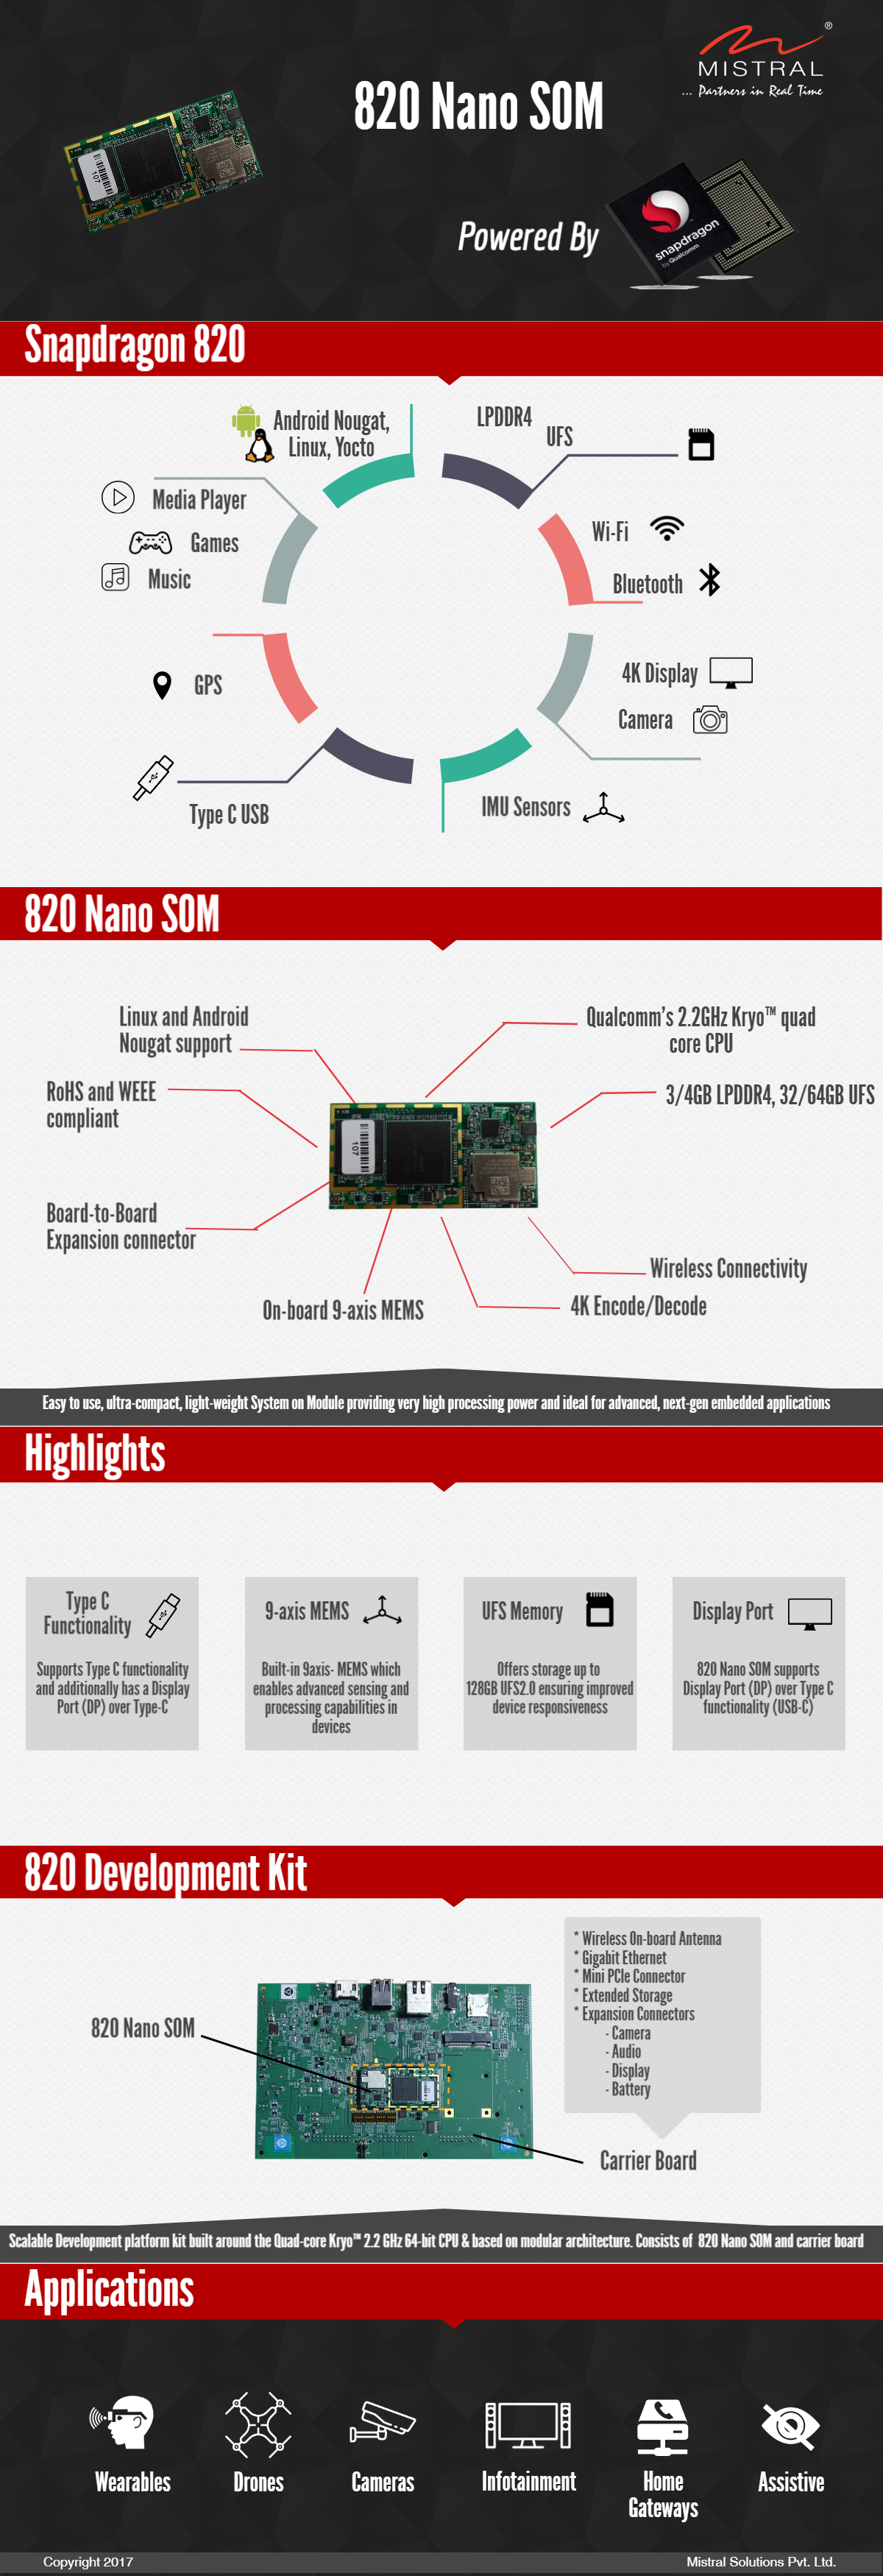 SnapDragon 820, 820 Nano SOM, SnapDragon 820 Development Kit